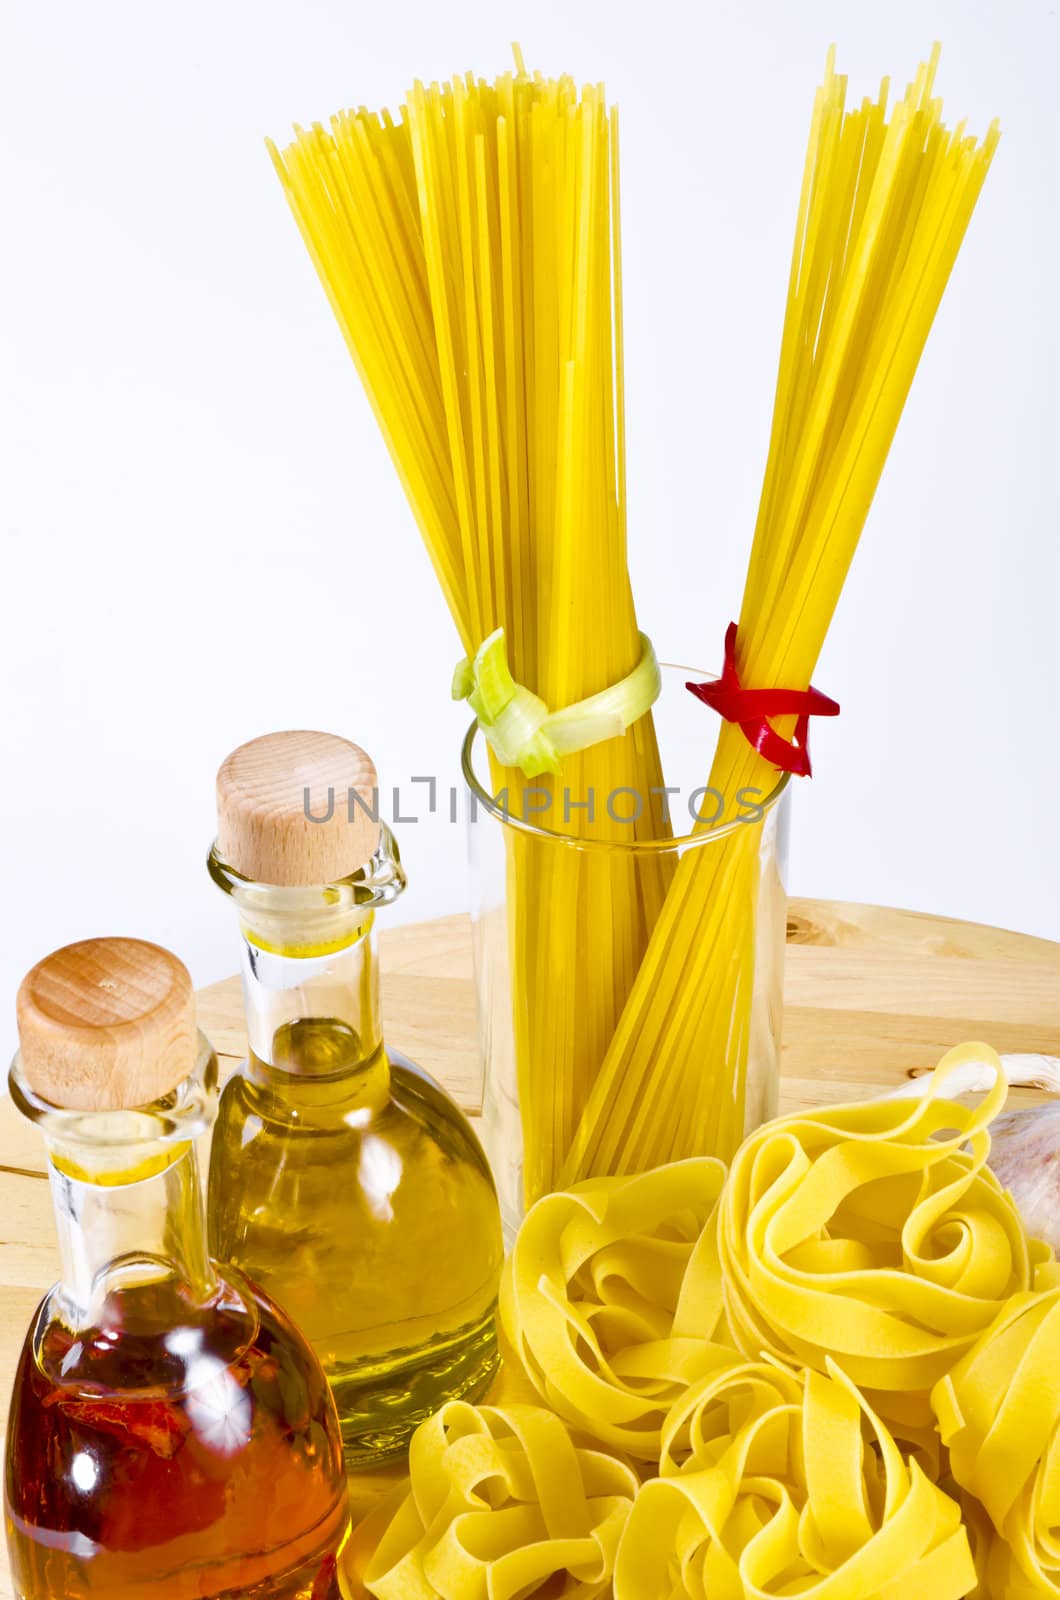 Pappardelle and spaghetti by Darius.Dzinnik